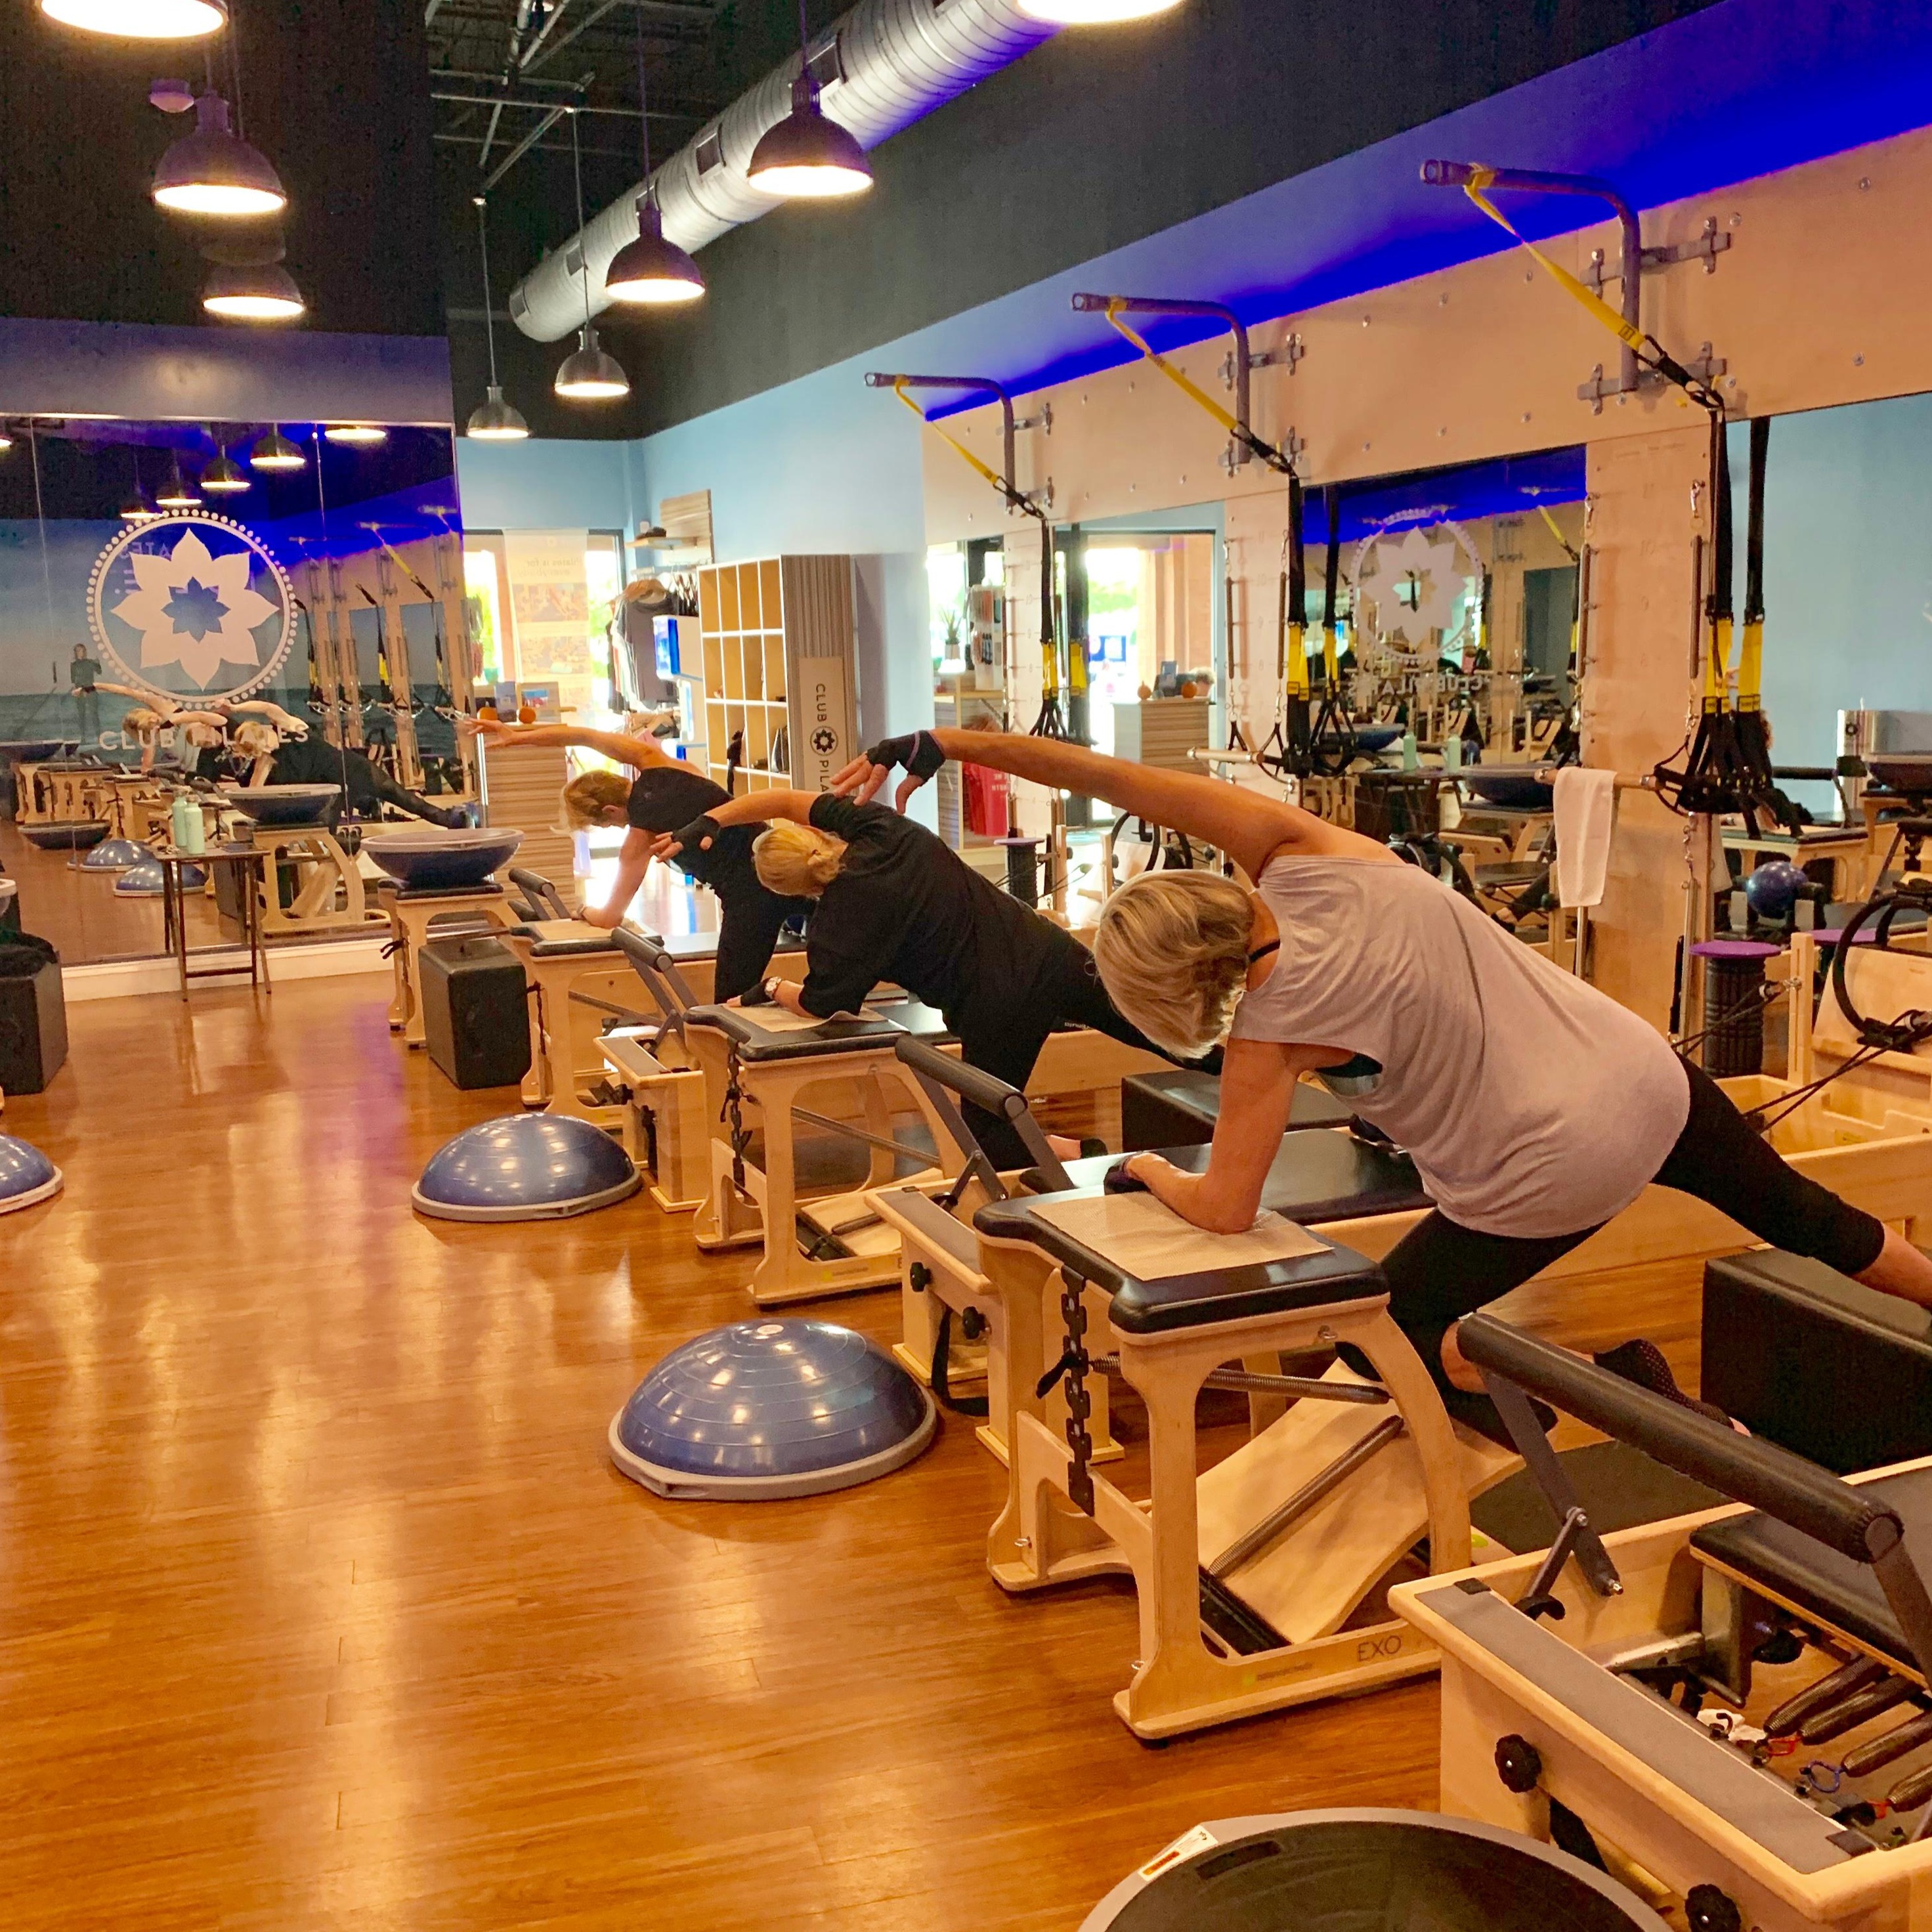 Club Pilates to open locations in Fullerton, Brea – Orange County Register